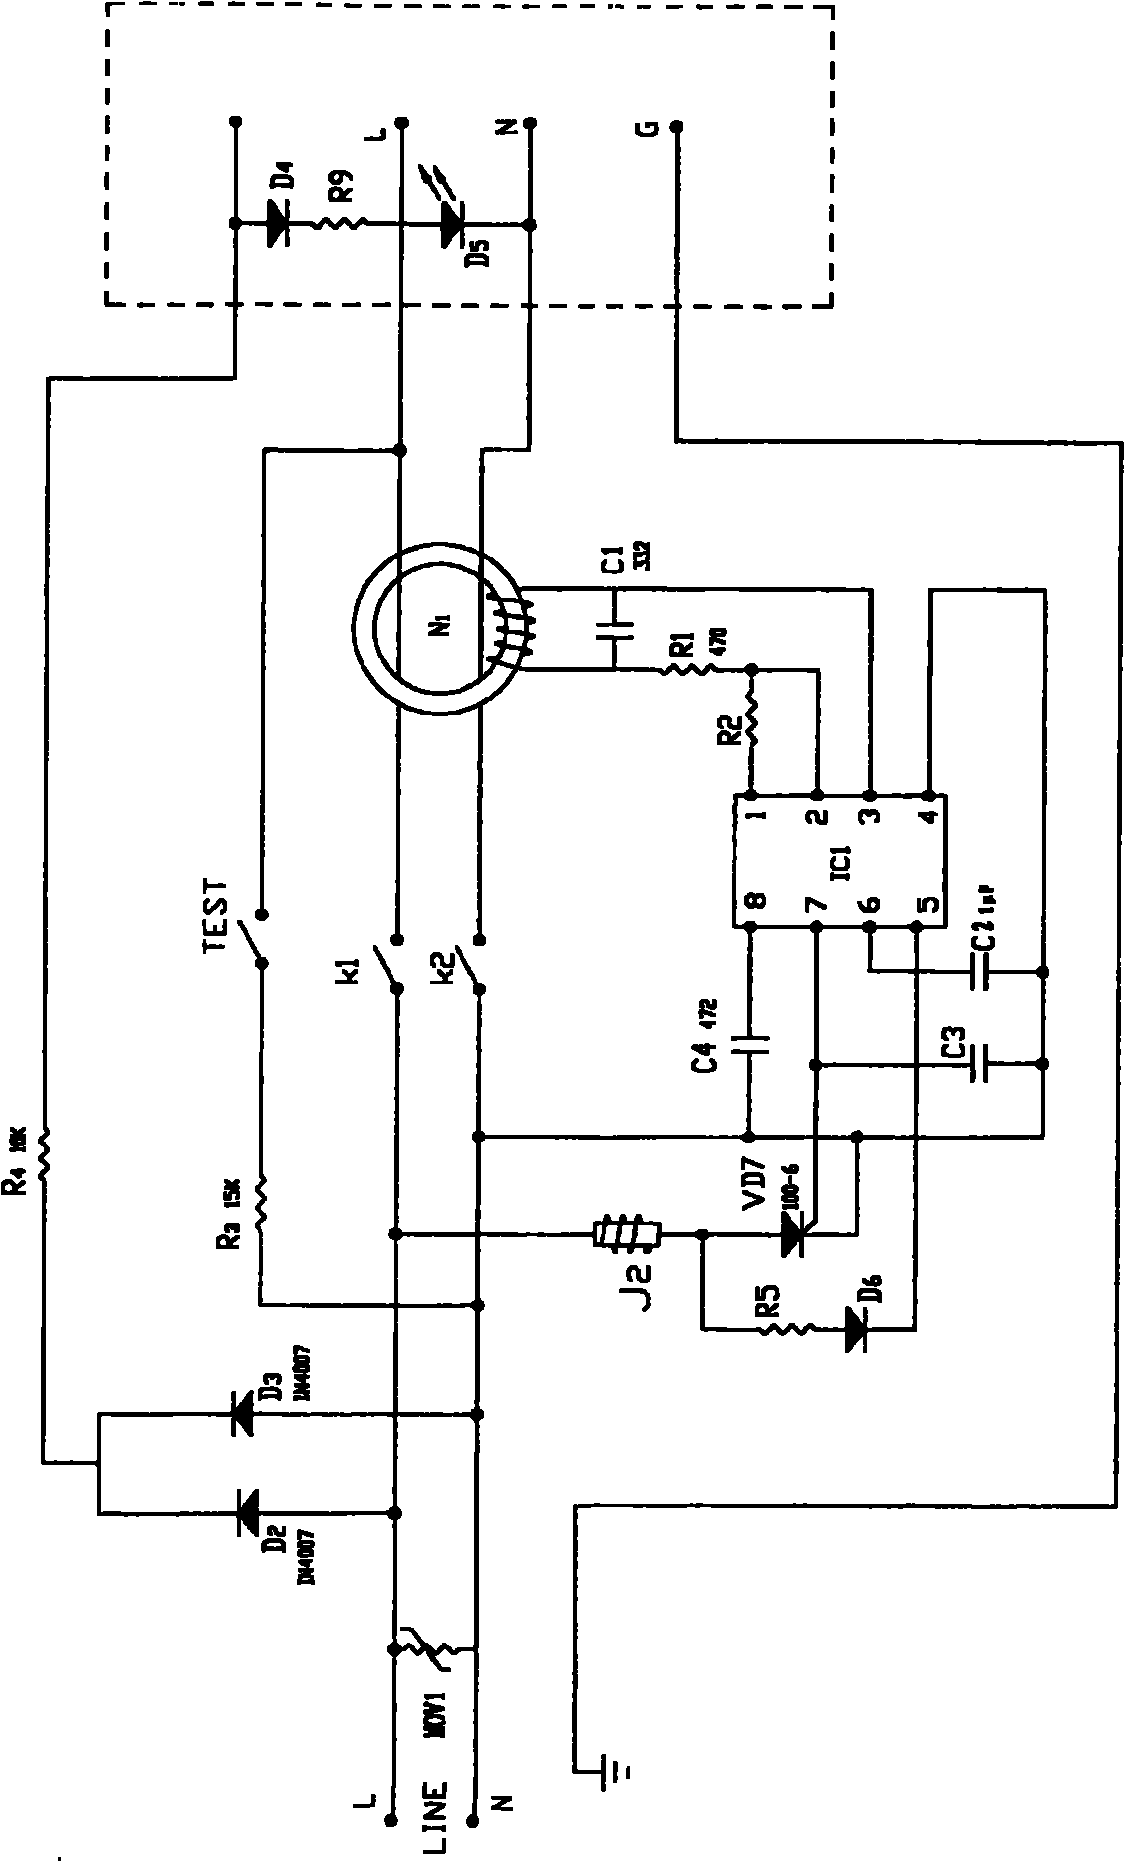 High-sensitivity leakage current detection circuit breaker